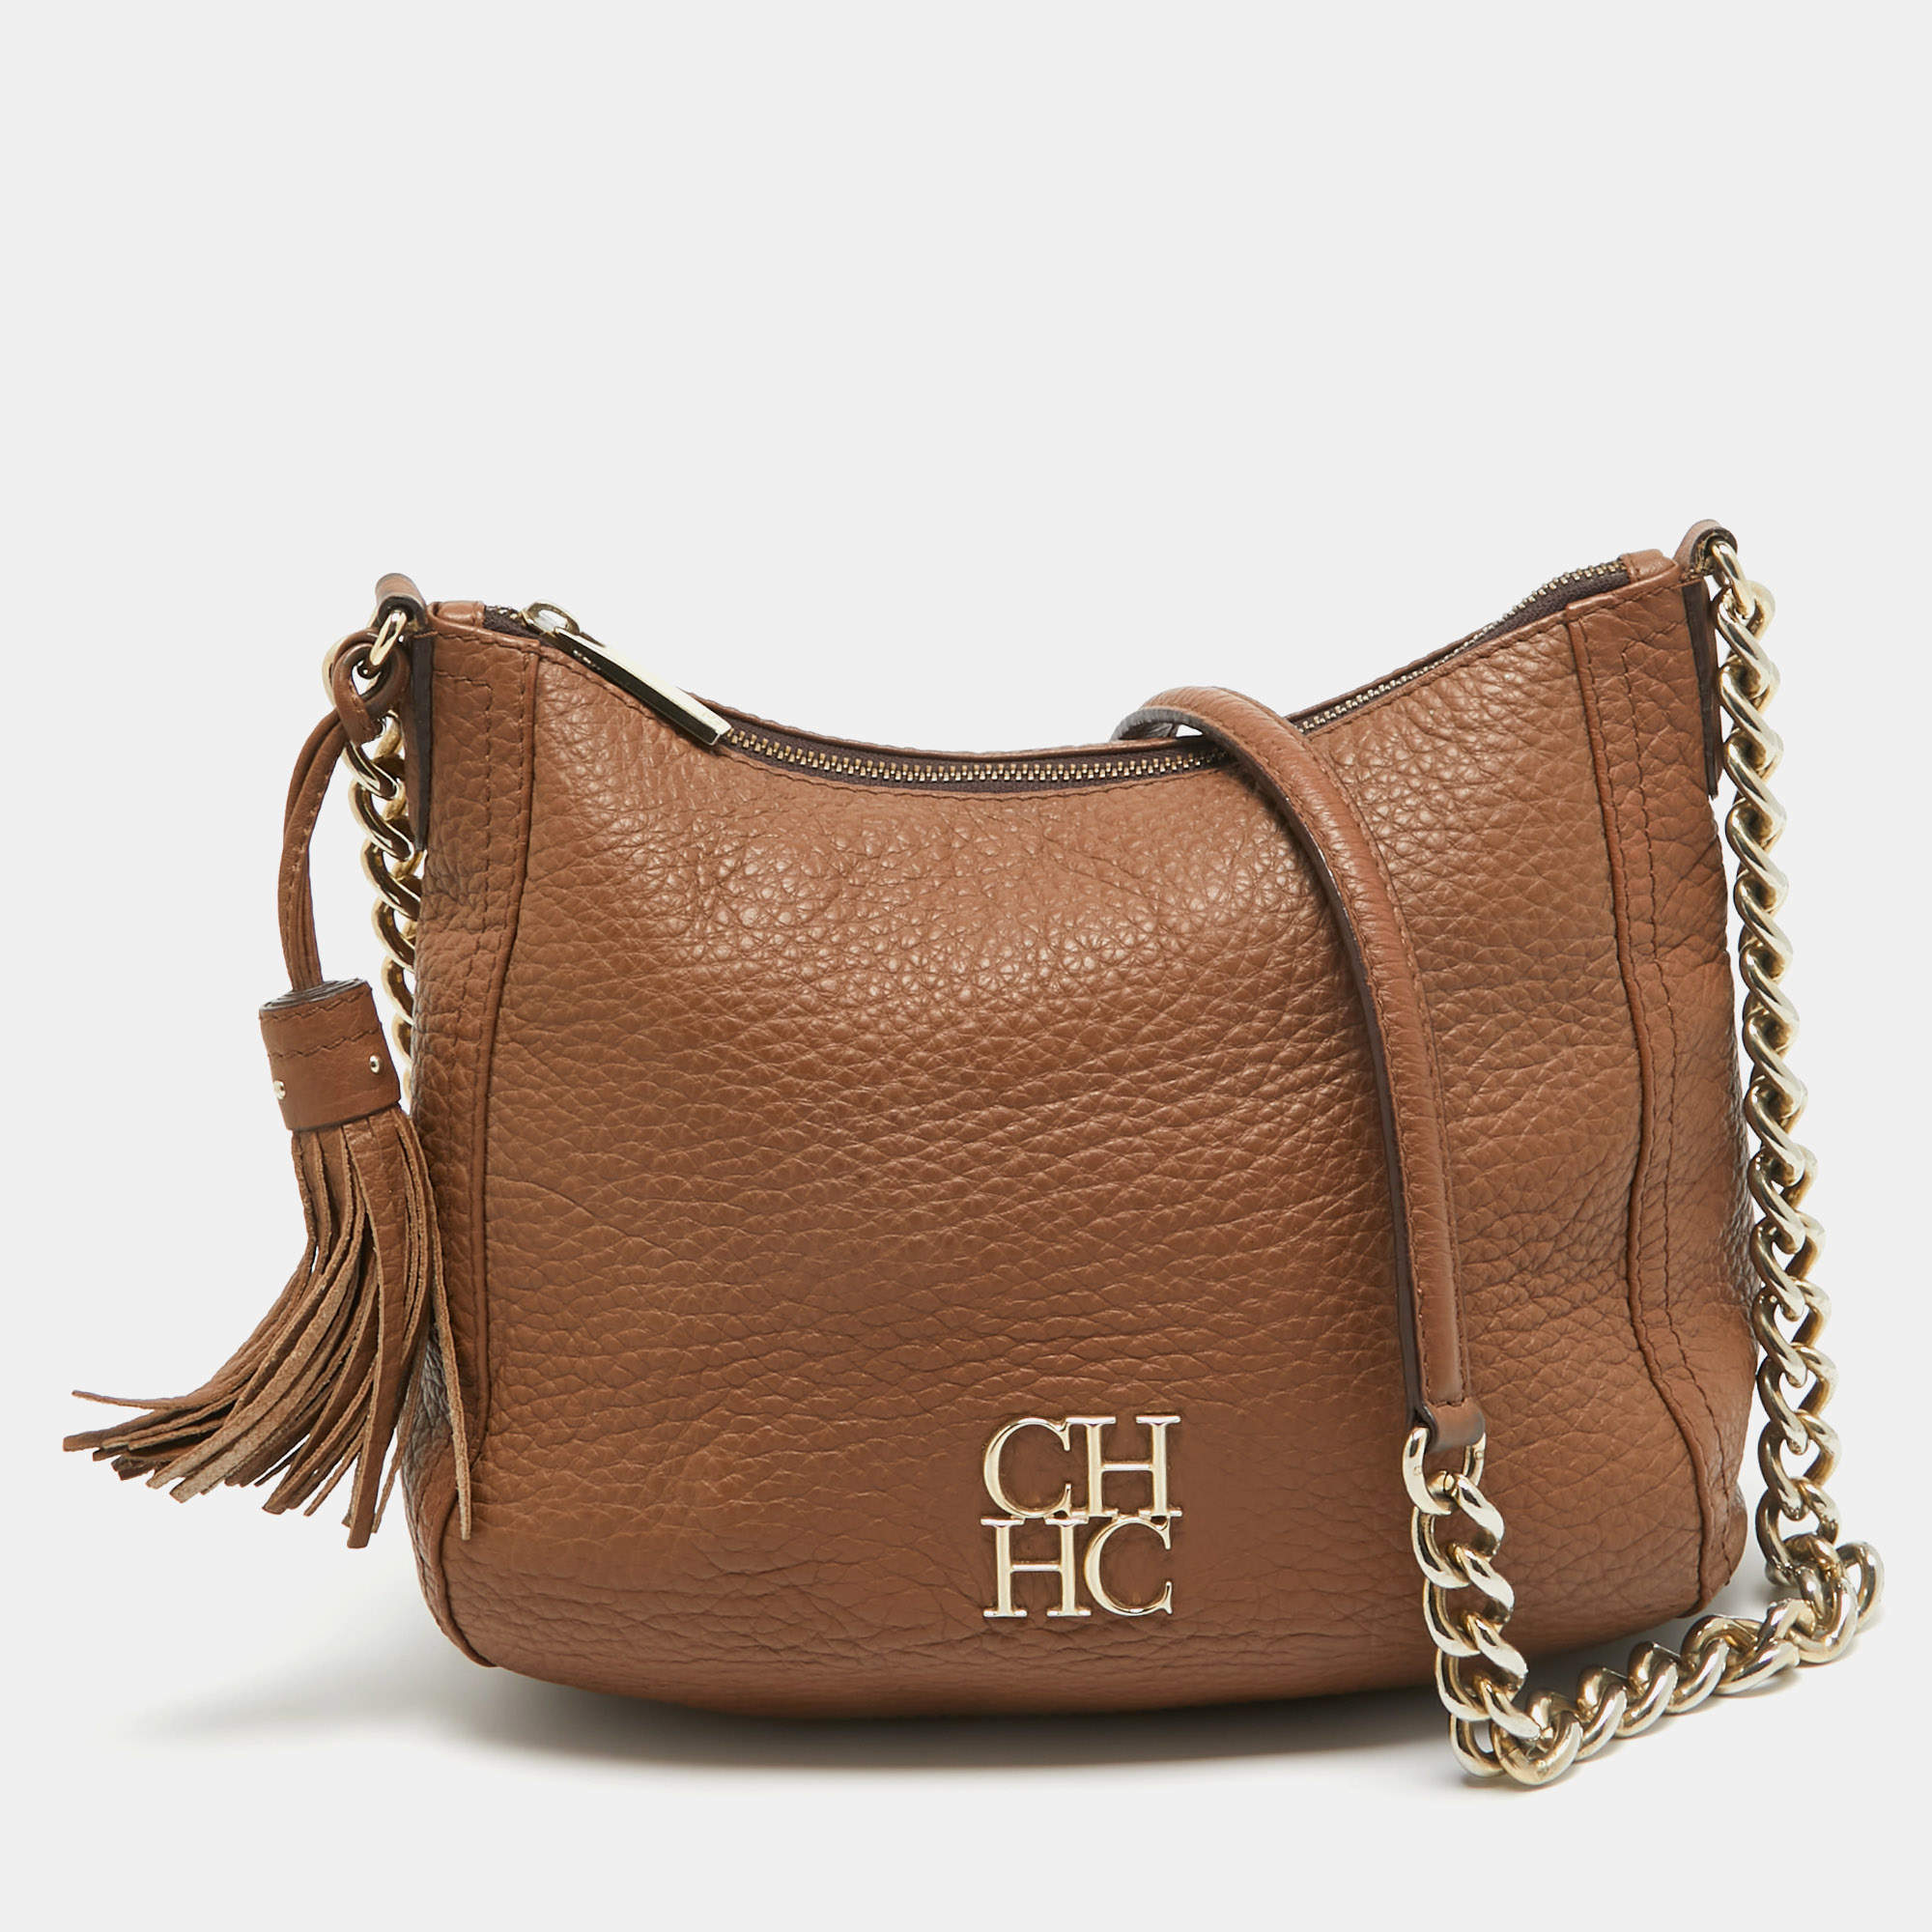 Carolina Herrera Brown Leather Tassel Chain Hobo